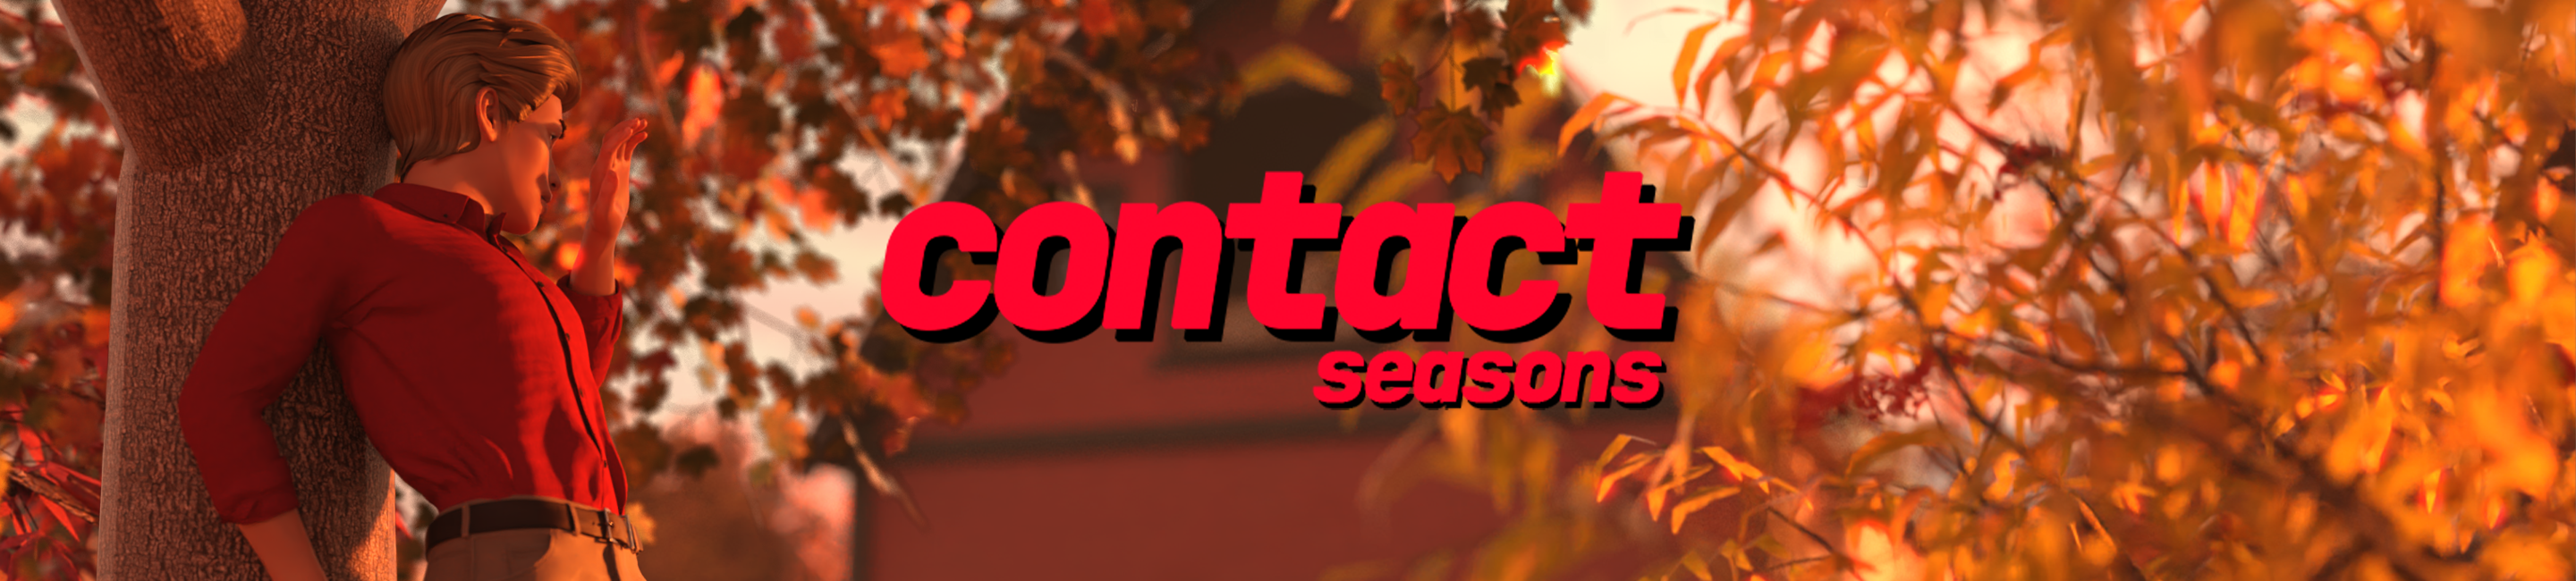 Contact: Seasons